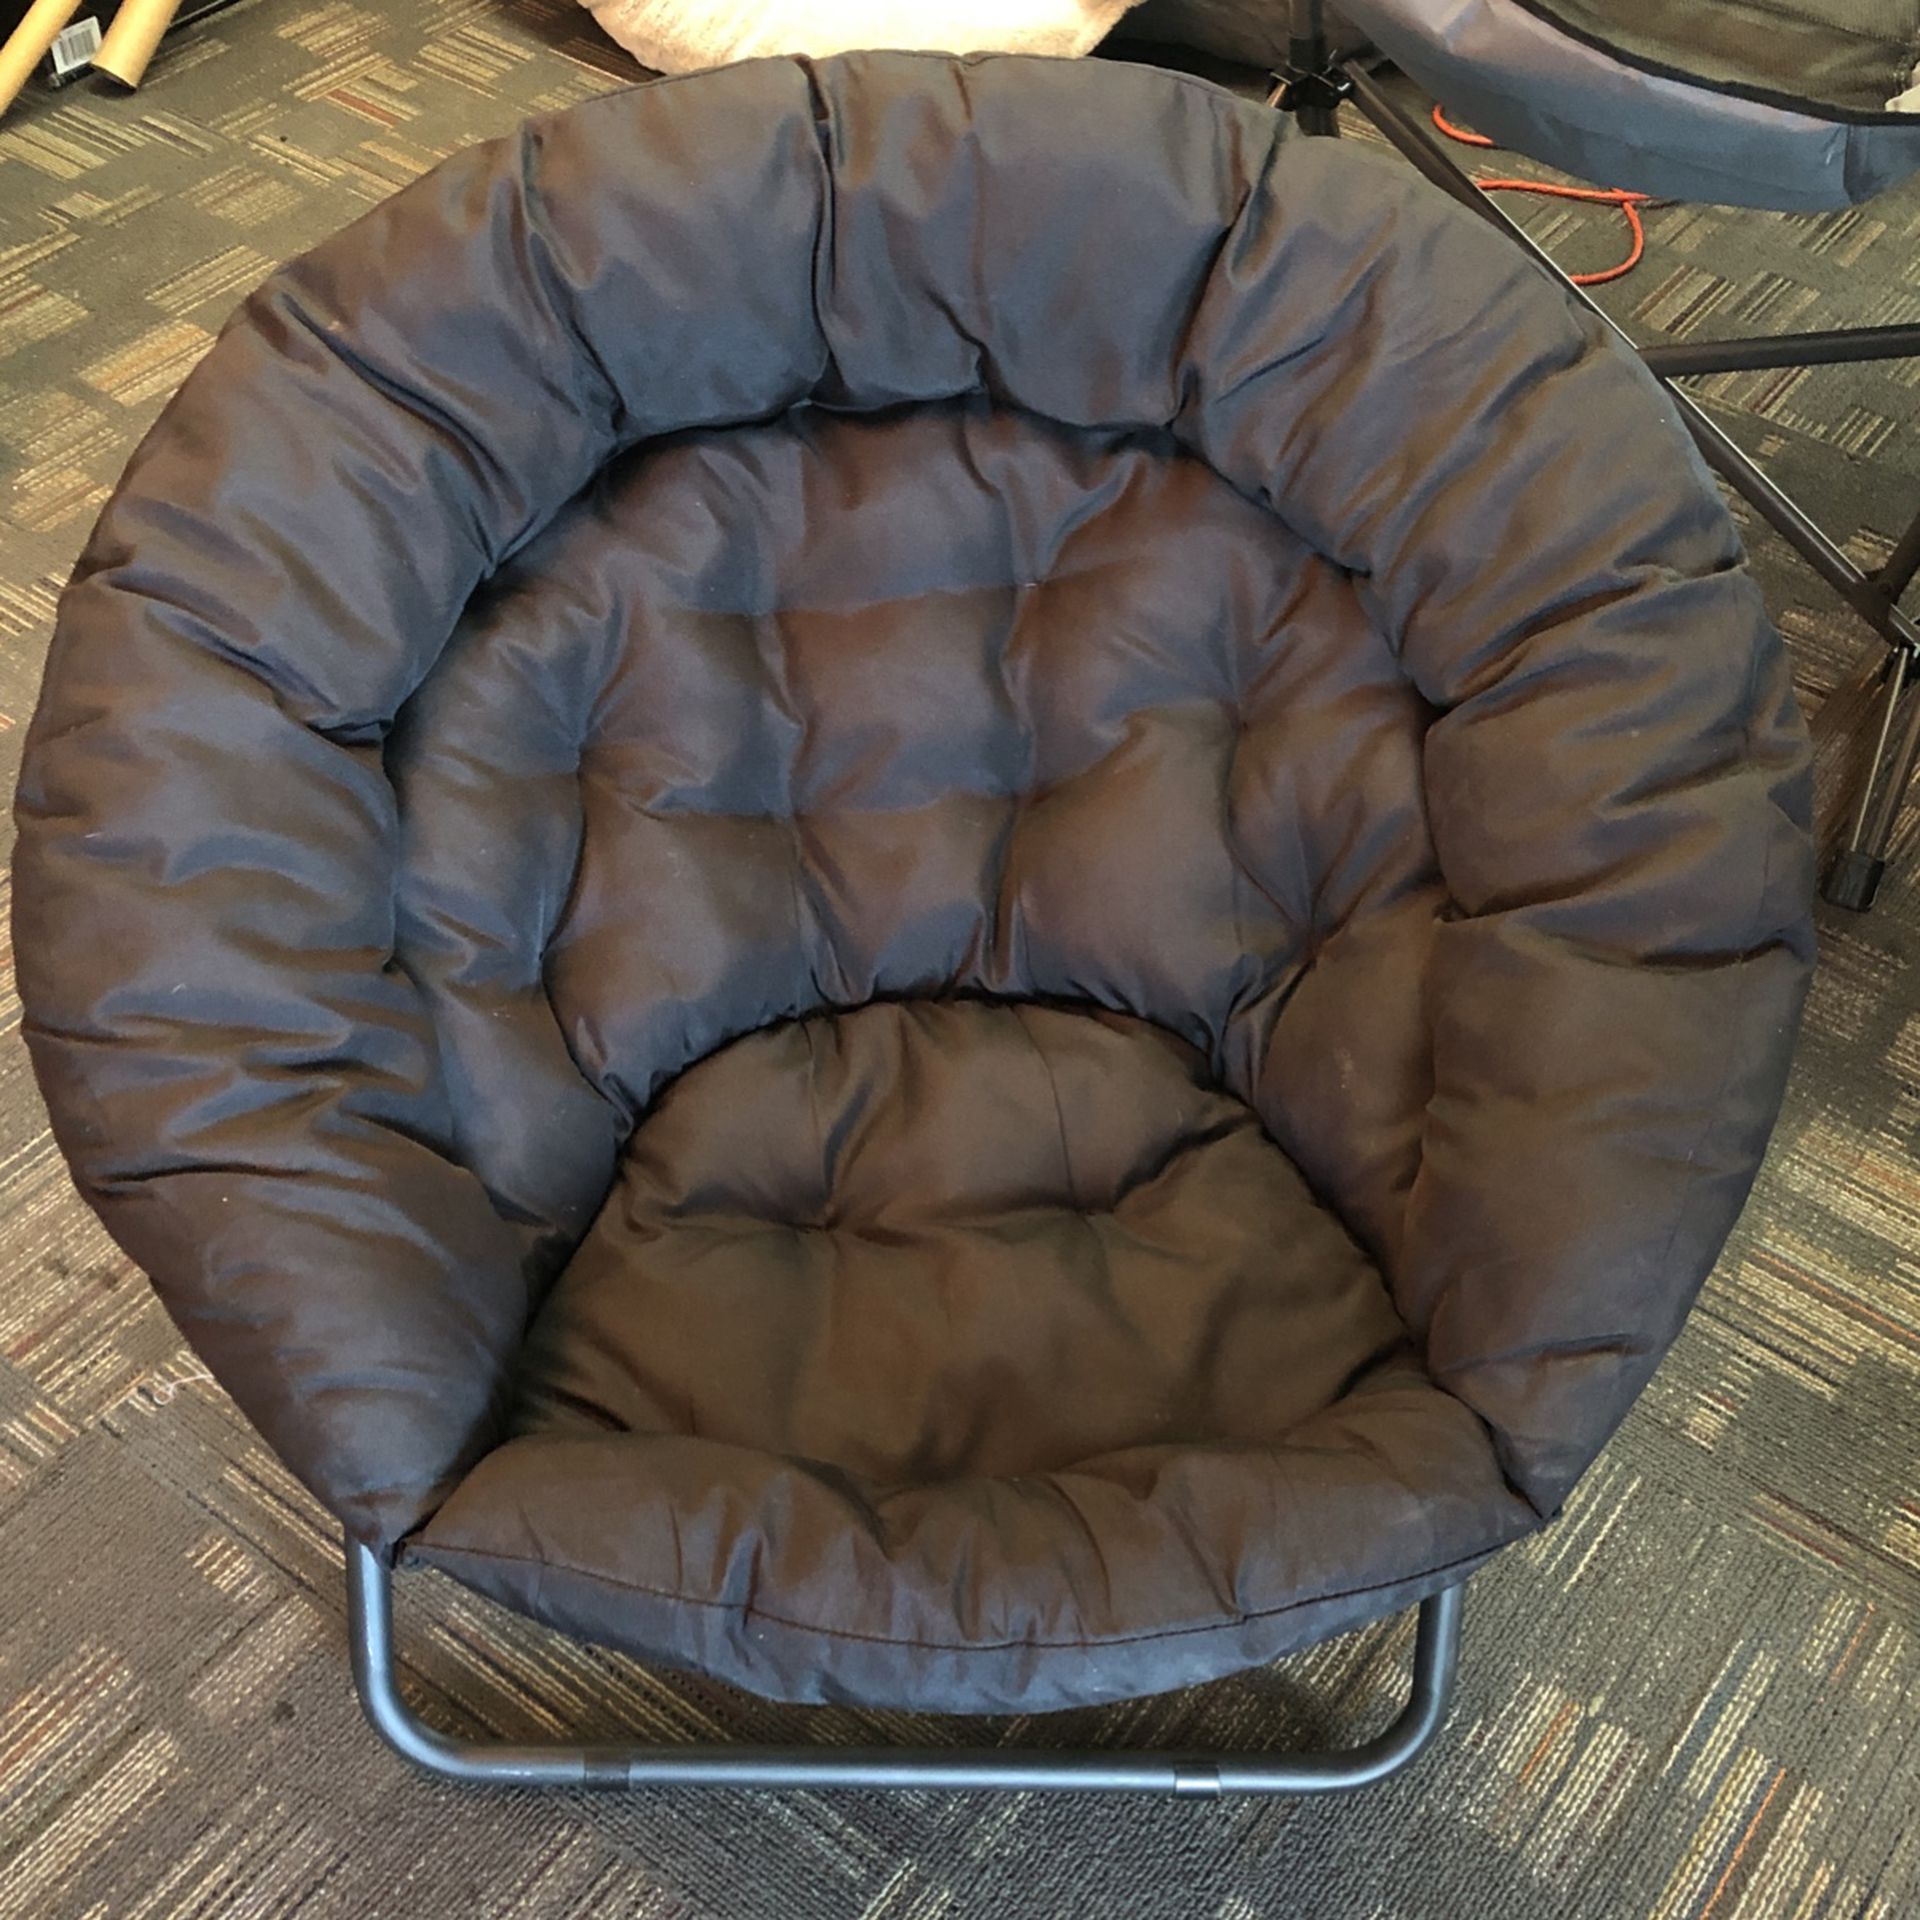 Black Saucer Chair 